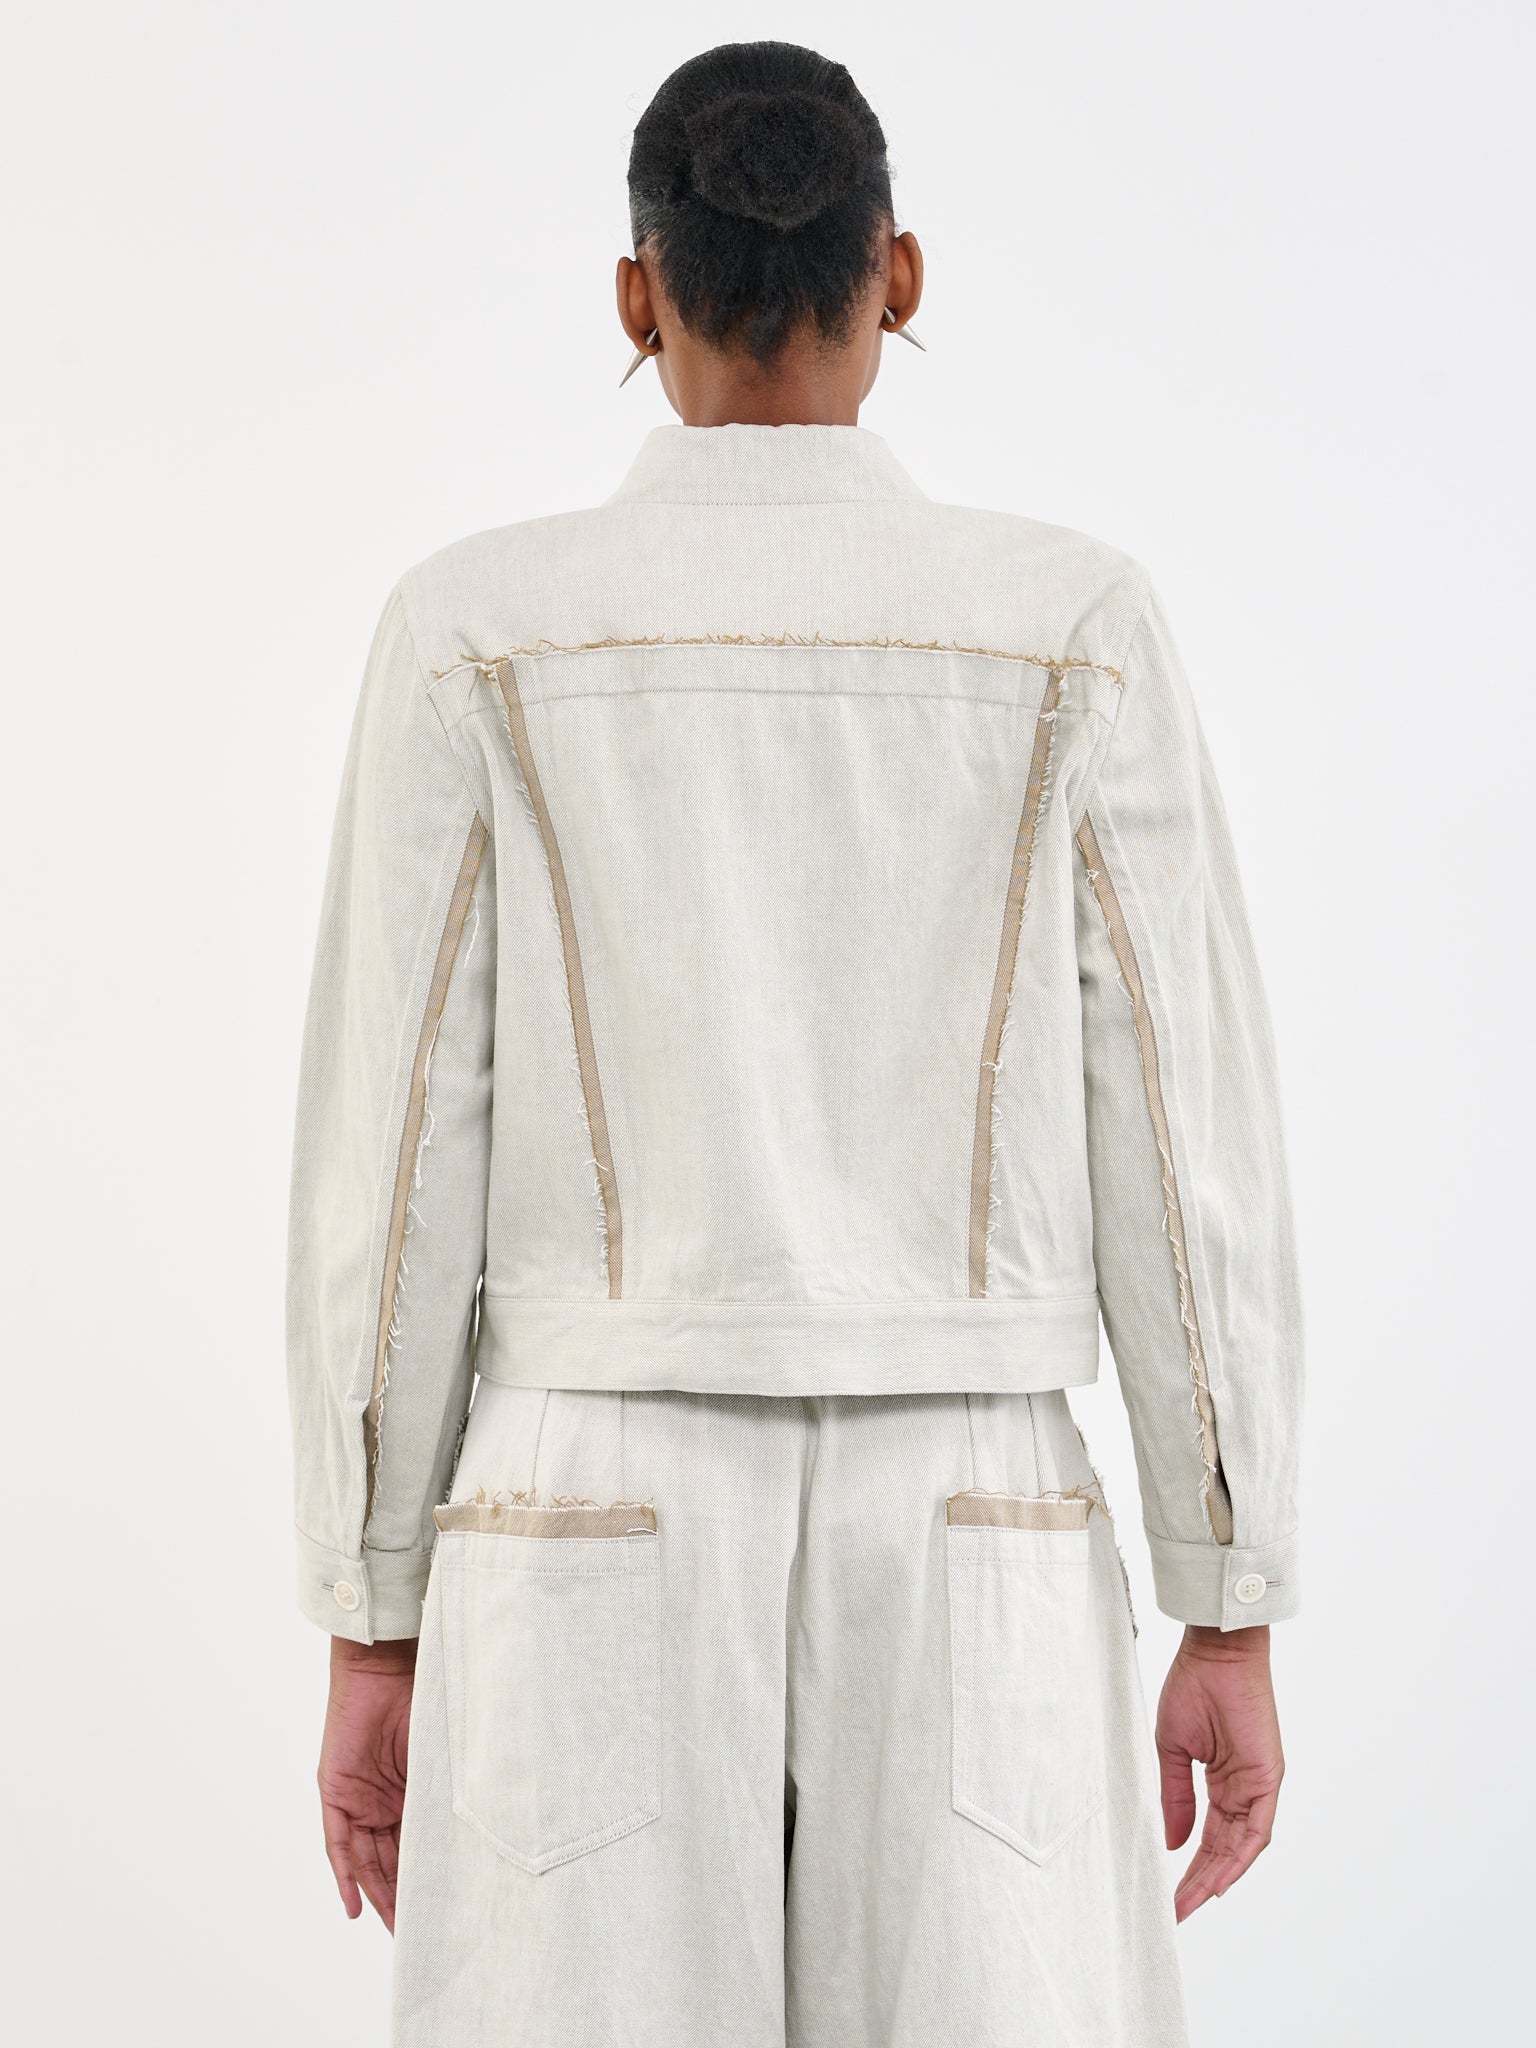 Shirt Jacket (YU-Y01-028-1-OFF-WHITE)